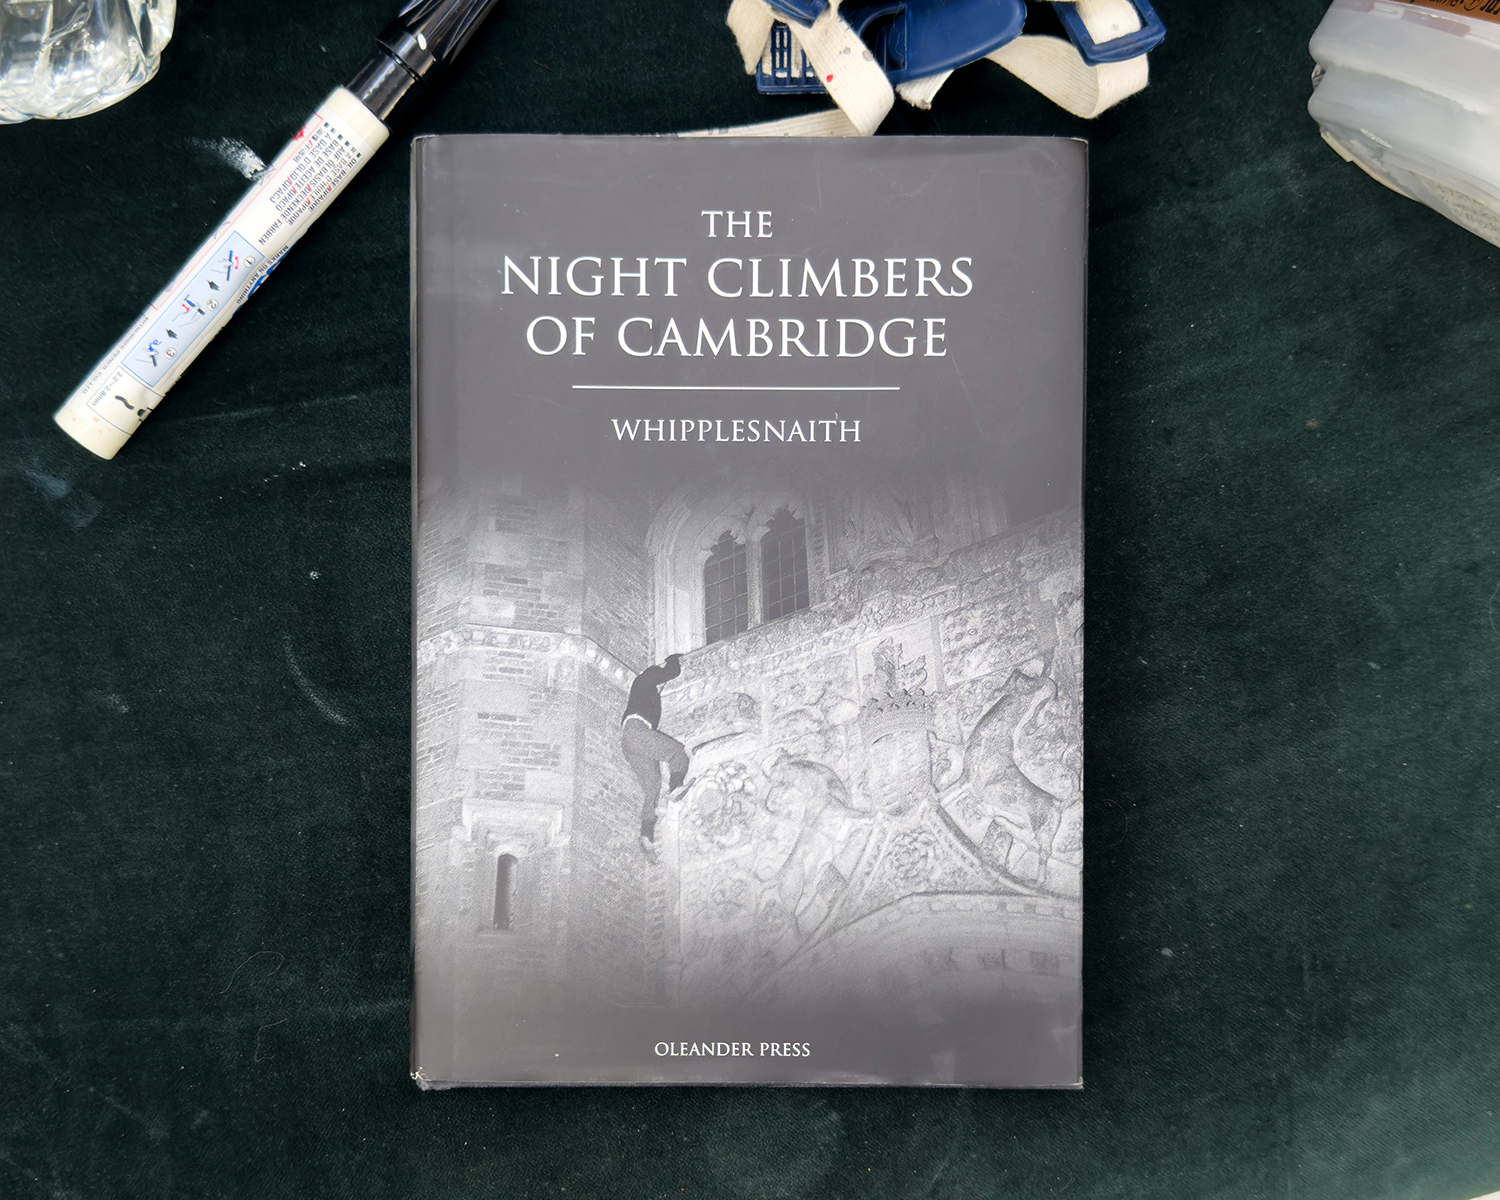 The Night Climbers of Cambridge - Whipplesnaith